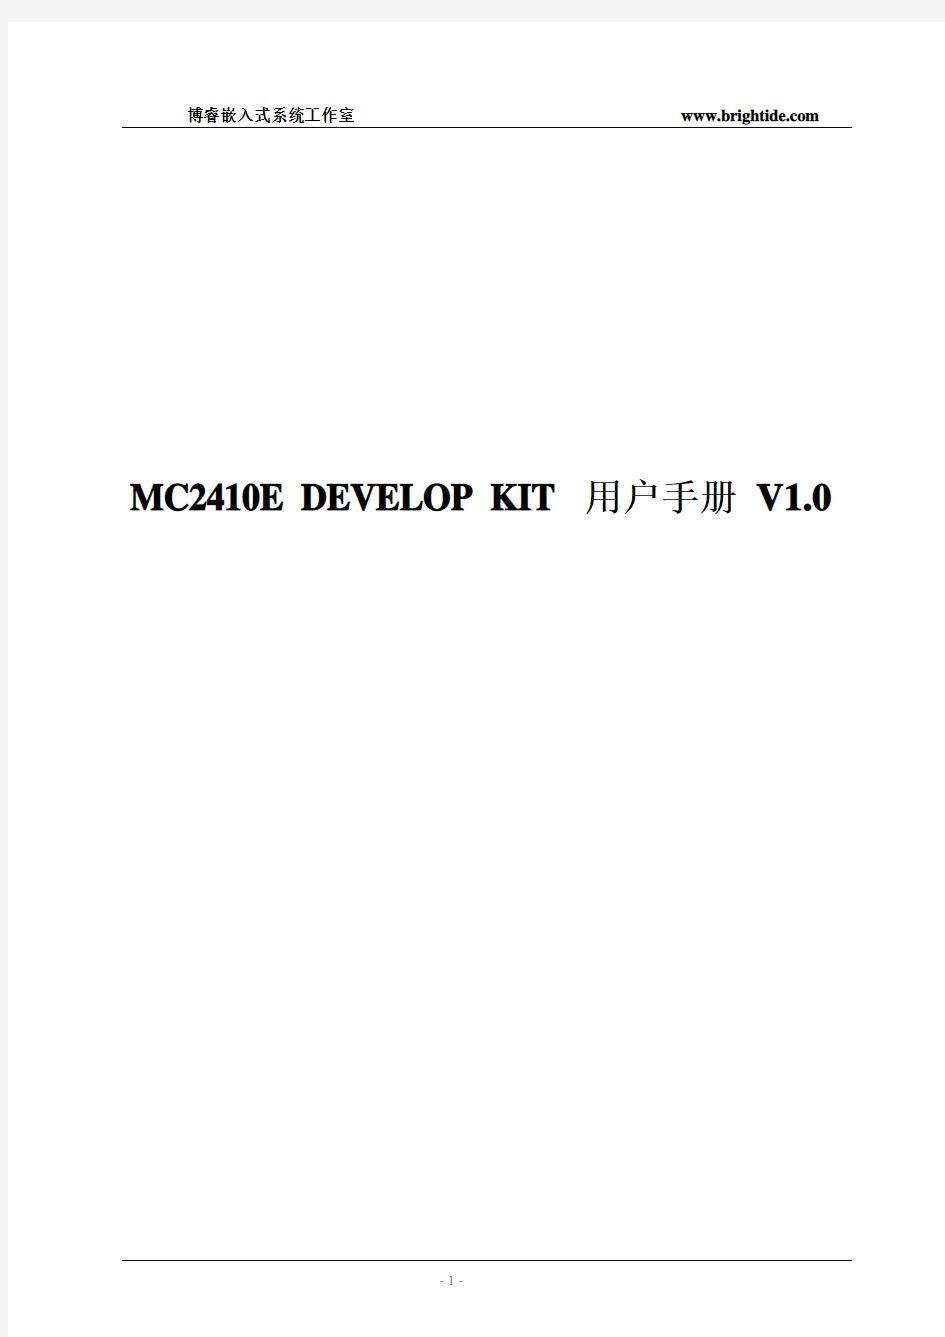 MC2410E DEVELOP KIT 用户手册 V1.0